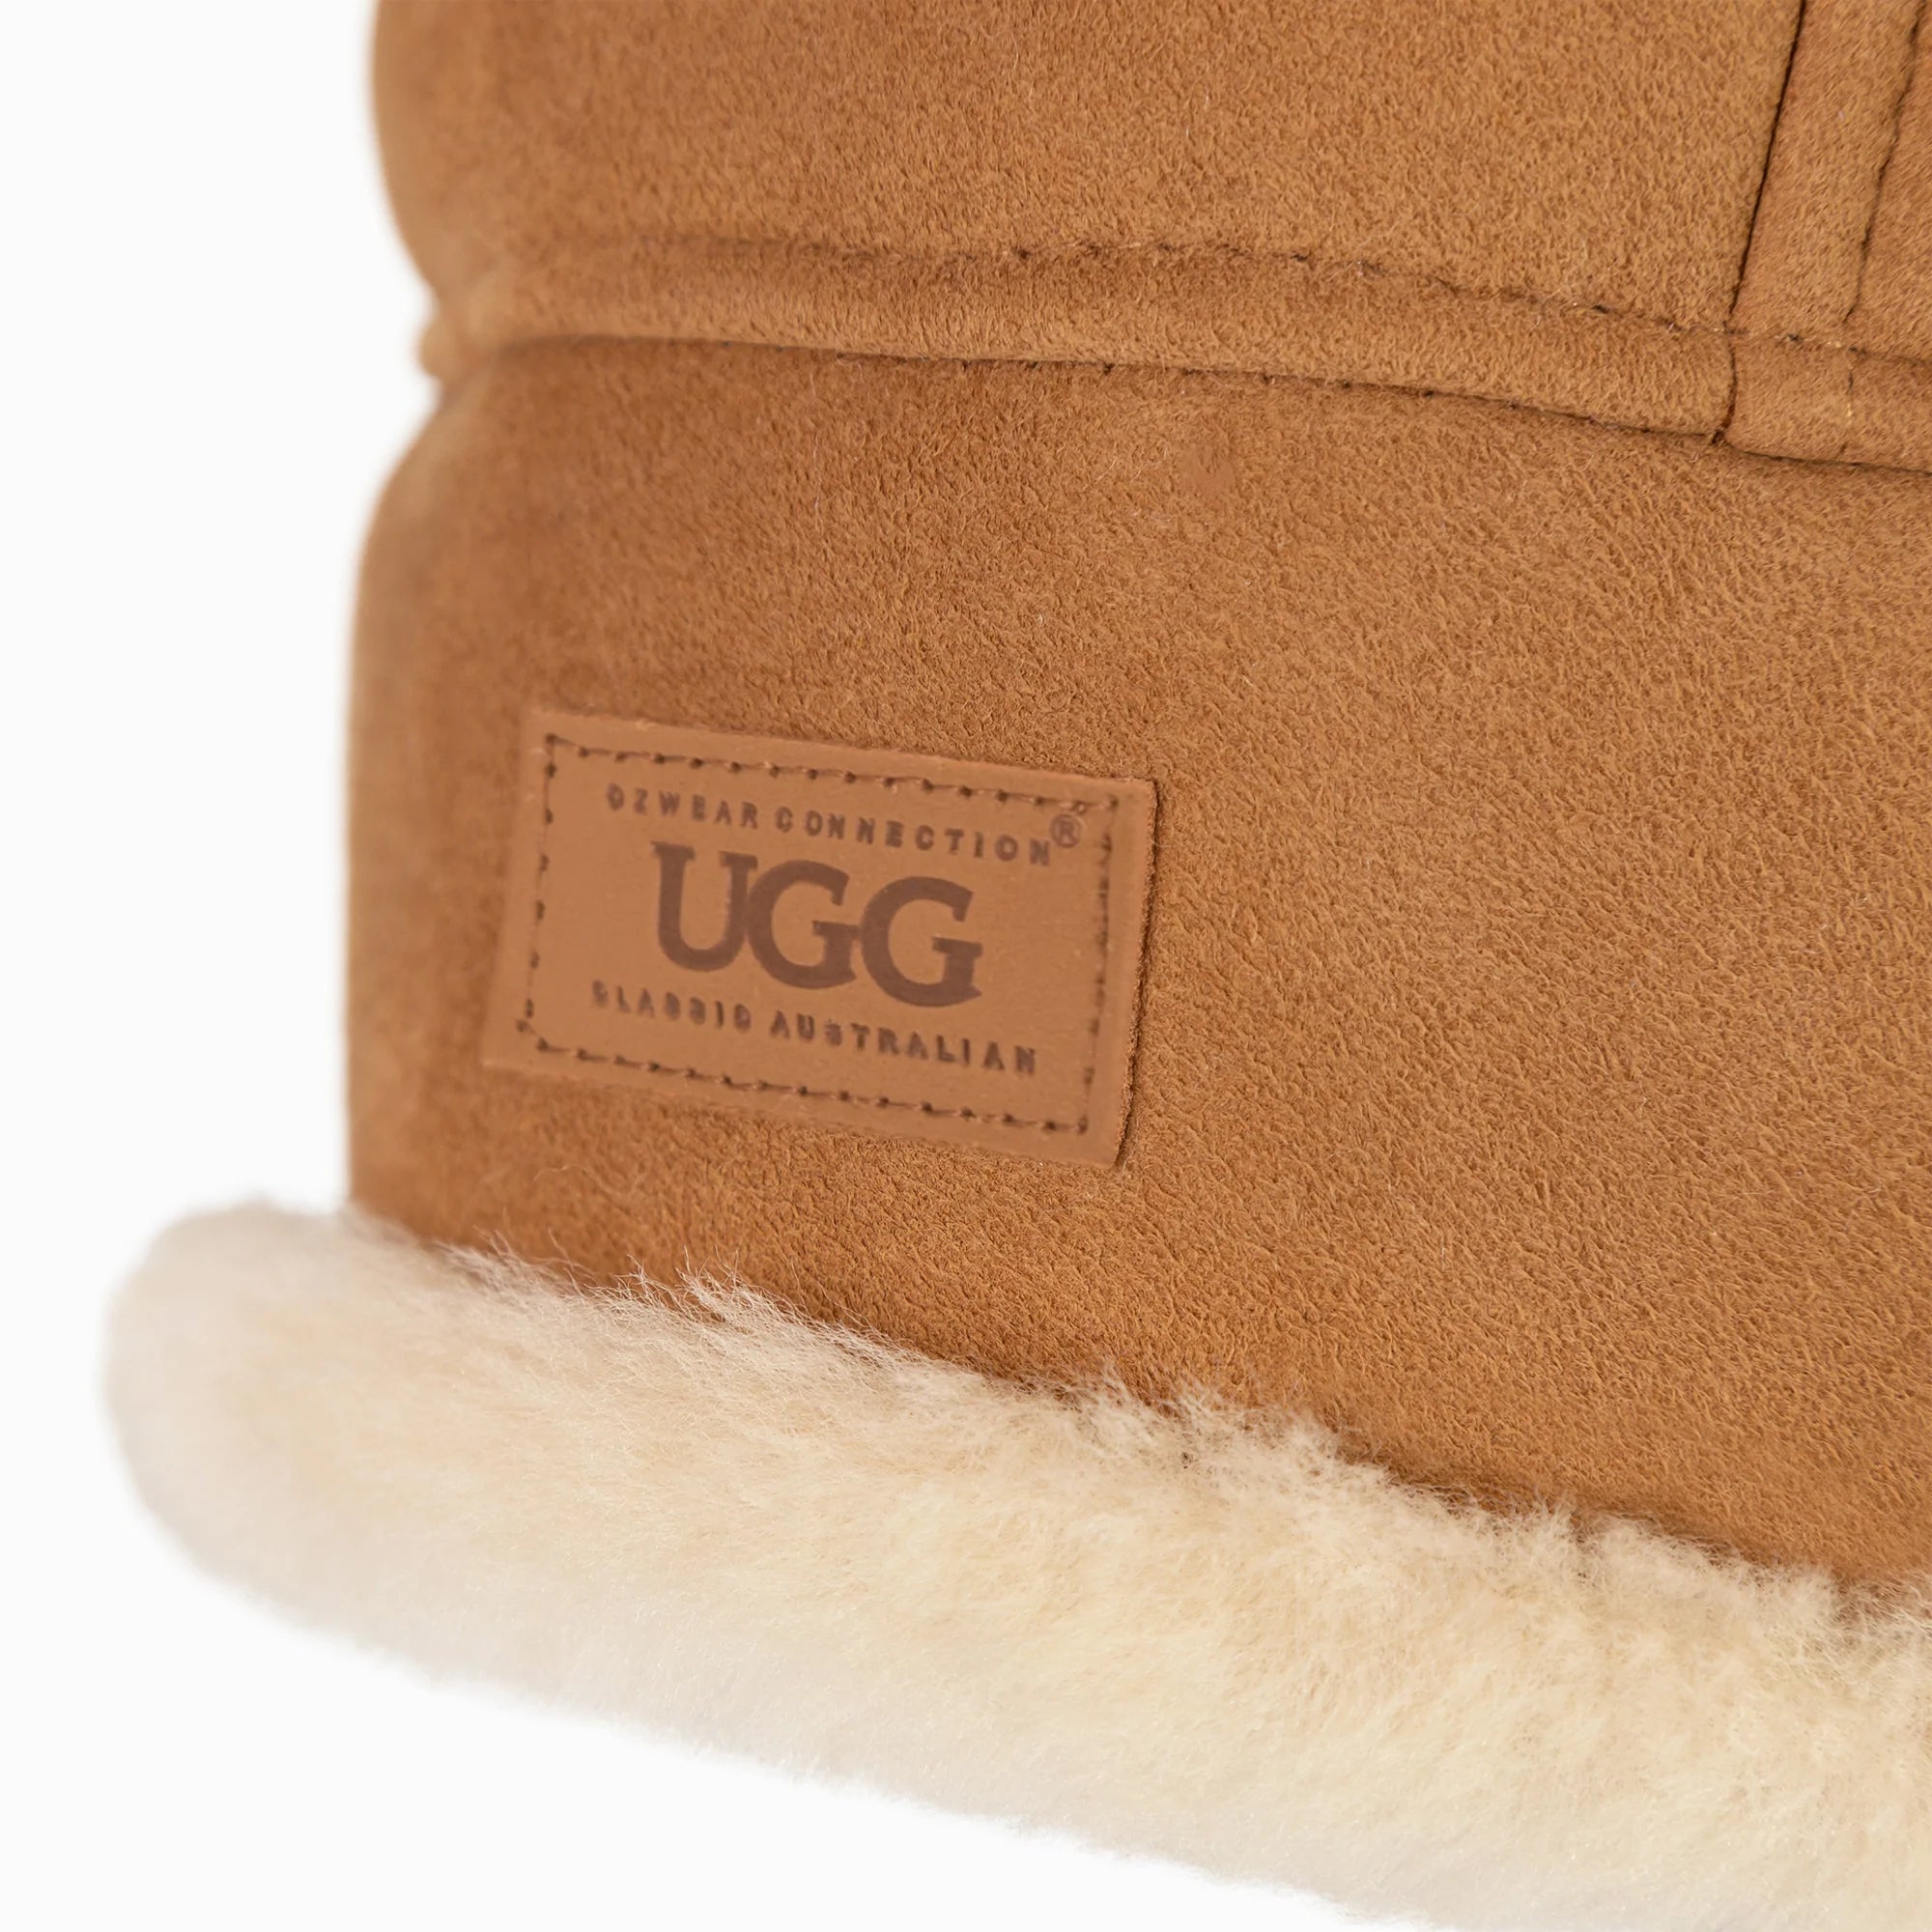  - UGG Sheepskin Upflap Hat - Original UGG Australia Classic